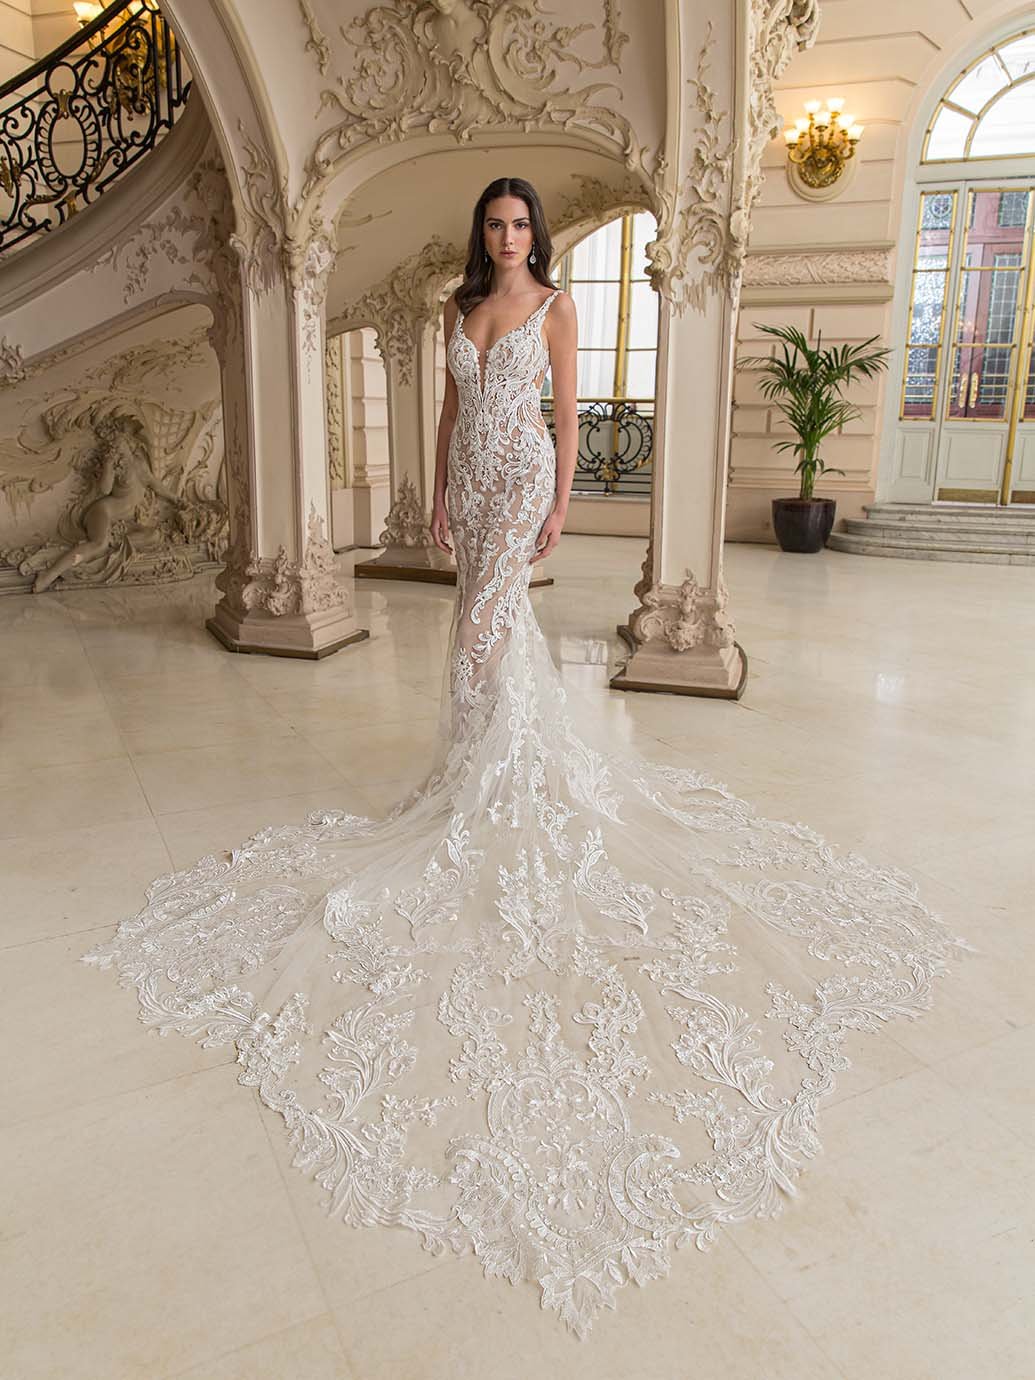 blanc-de-blanc-bridal-boutique-cleveland-dress-wedding-gown-elysee-.jpg